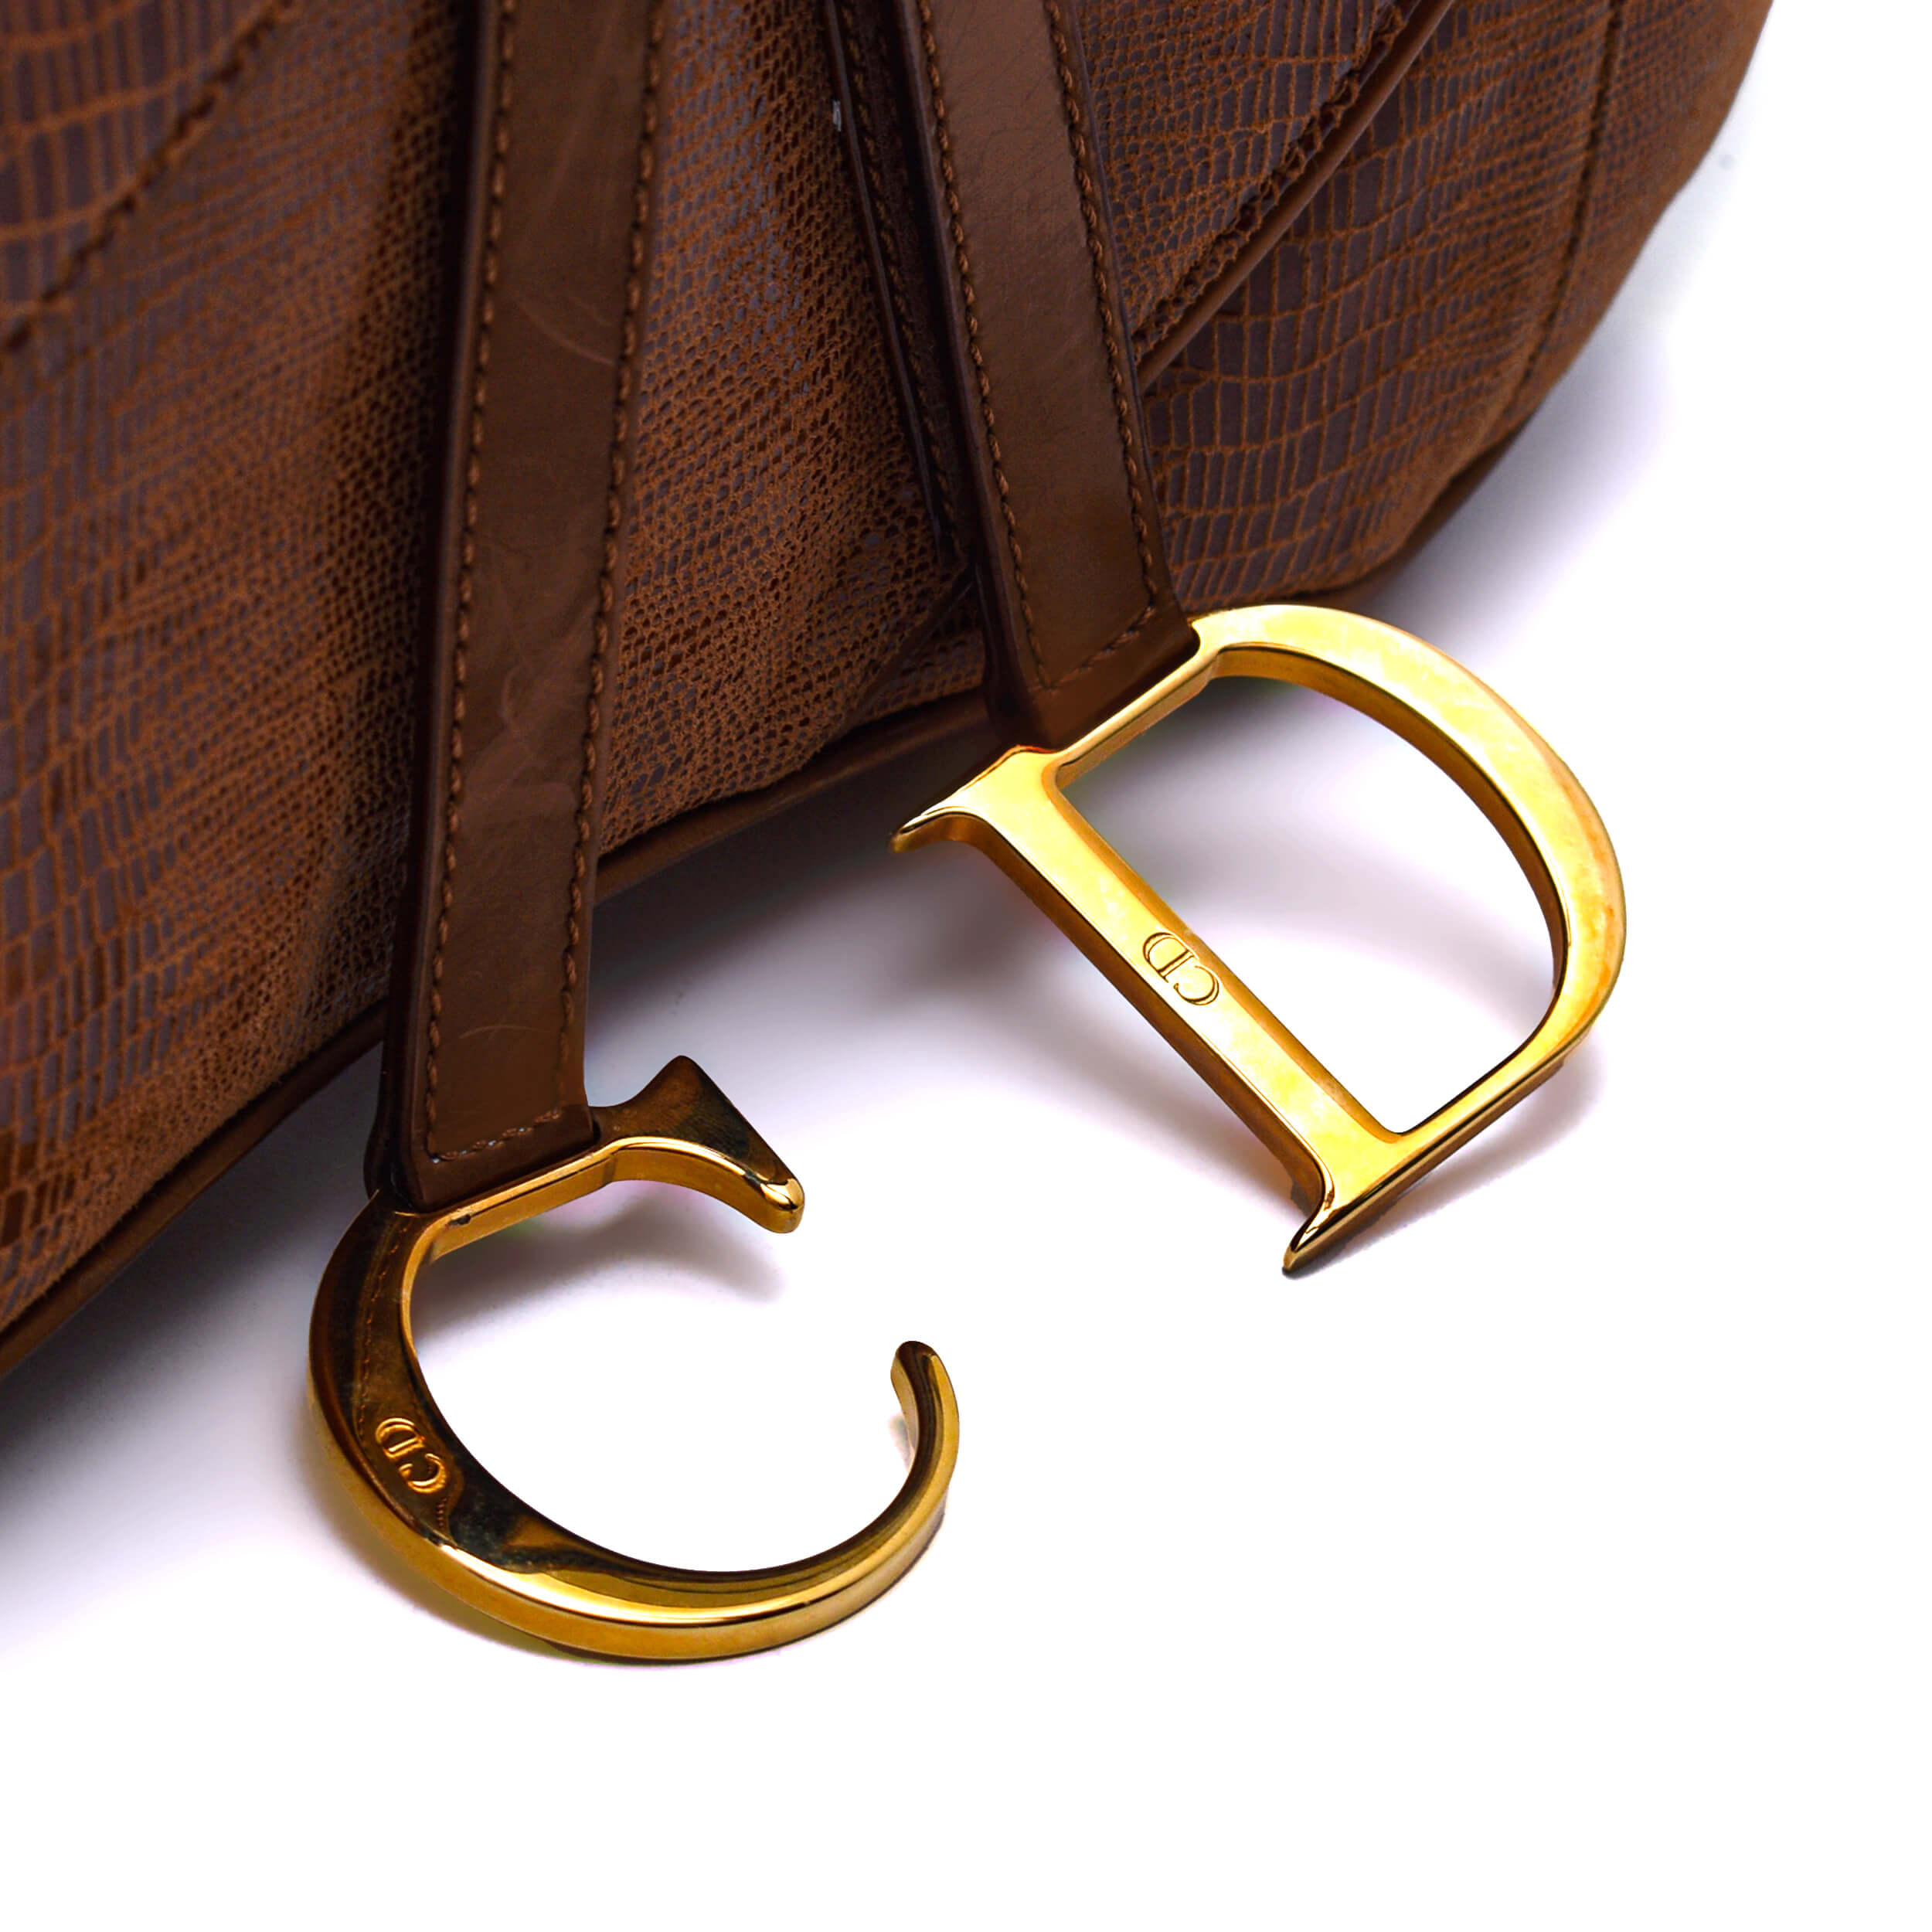 Christian Dior - Brown Exotic Leather Saddle Bag